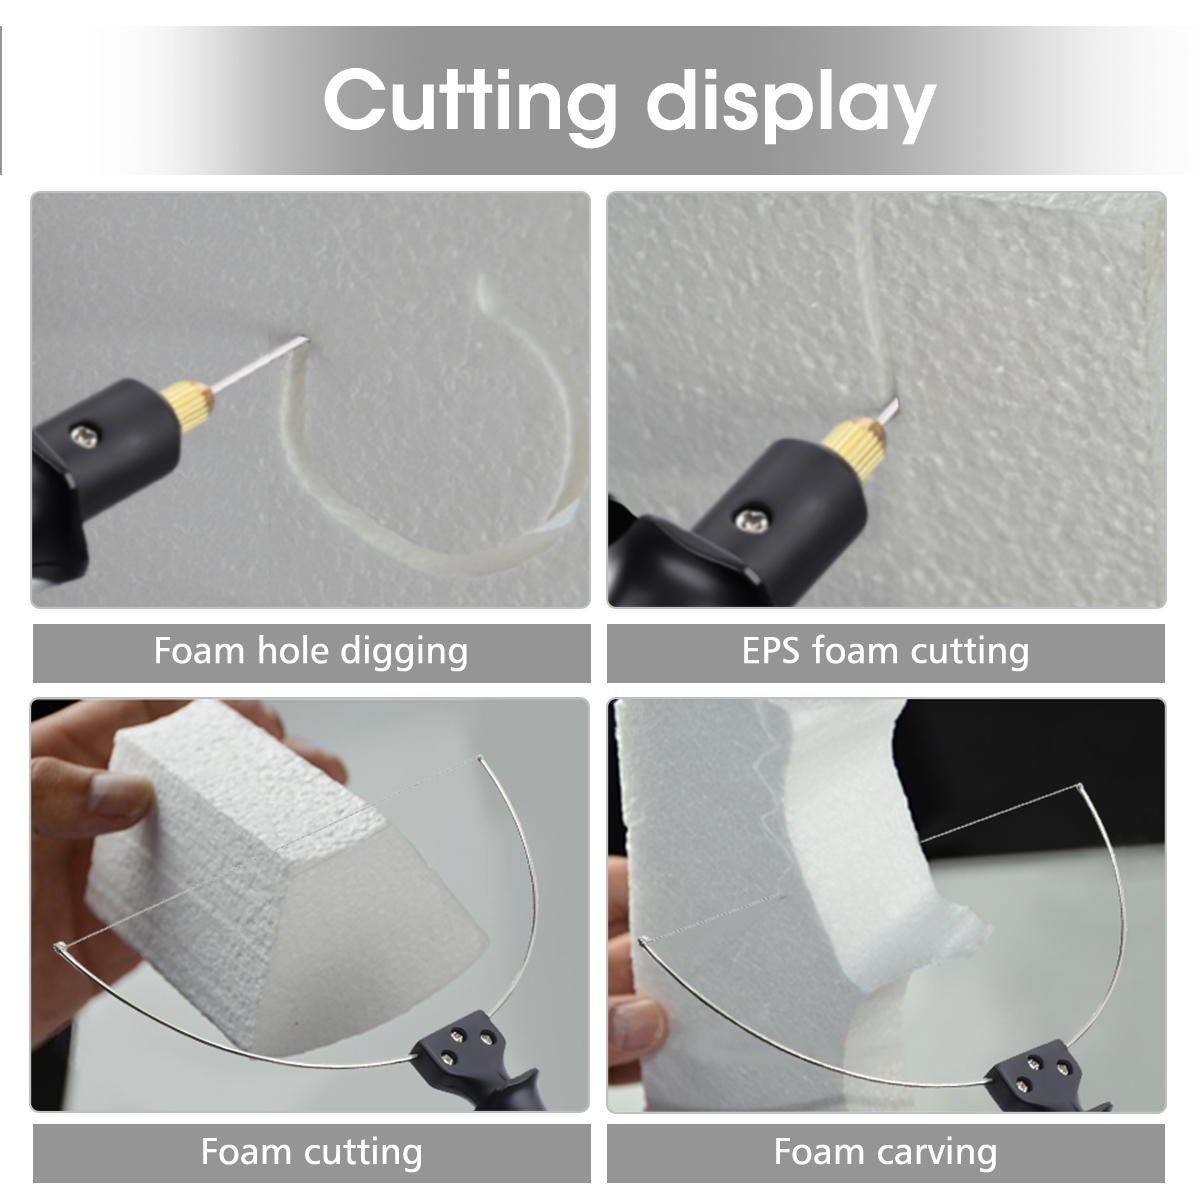 3-in-1 Foam Cutter Cutter with Indicator Light Electric Cutting Machine Pen Tools Kit GOCHANGE Foam Cutter Styrofoam Cutter with 3 Interchangeable Pins